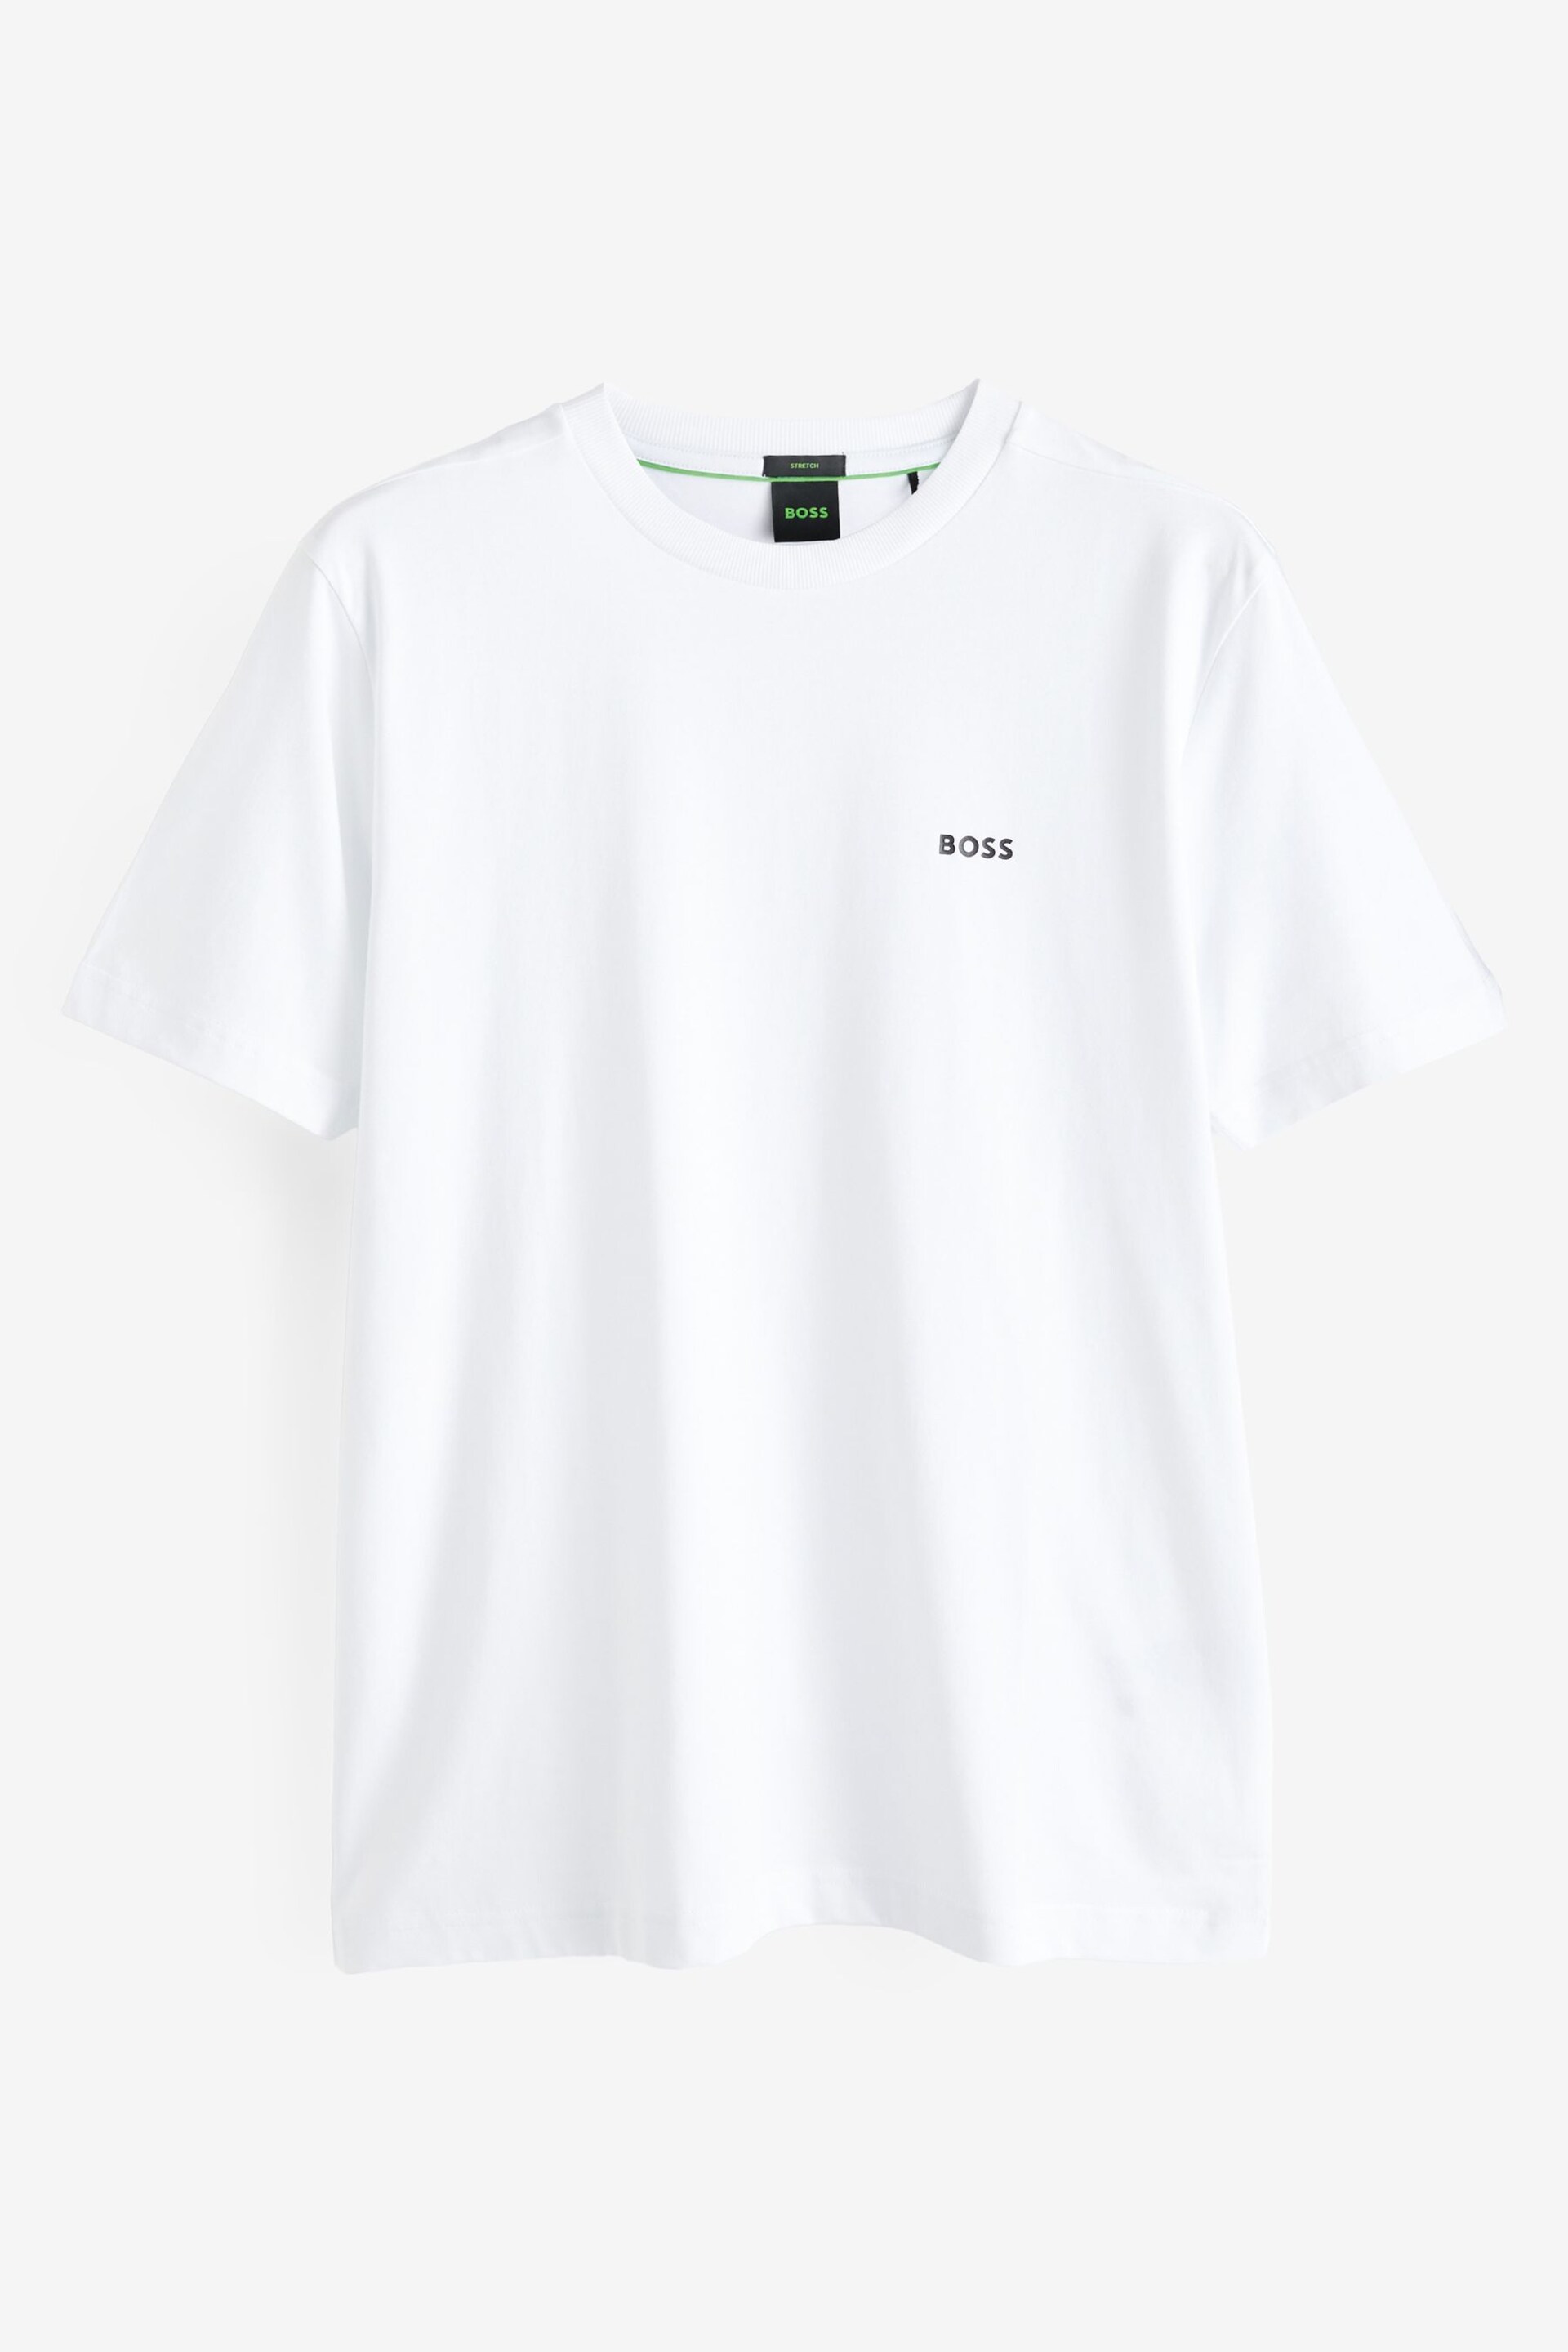 BOSS White Contrast-Logo T-Shirt - Image 5 of 5